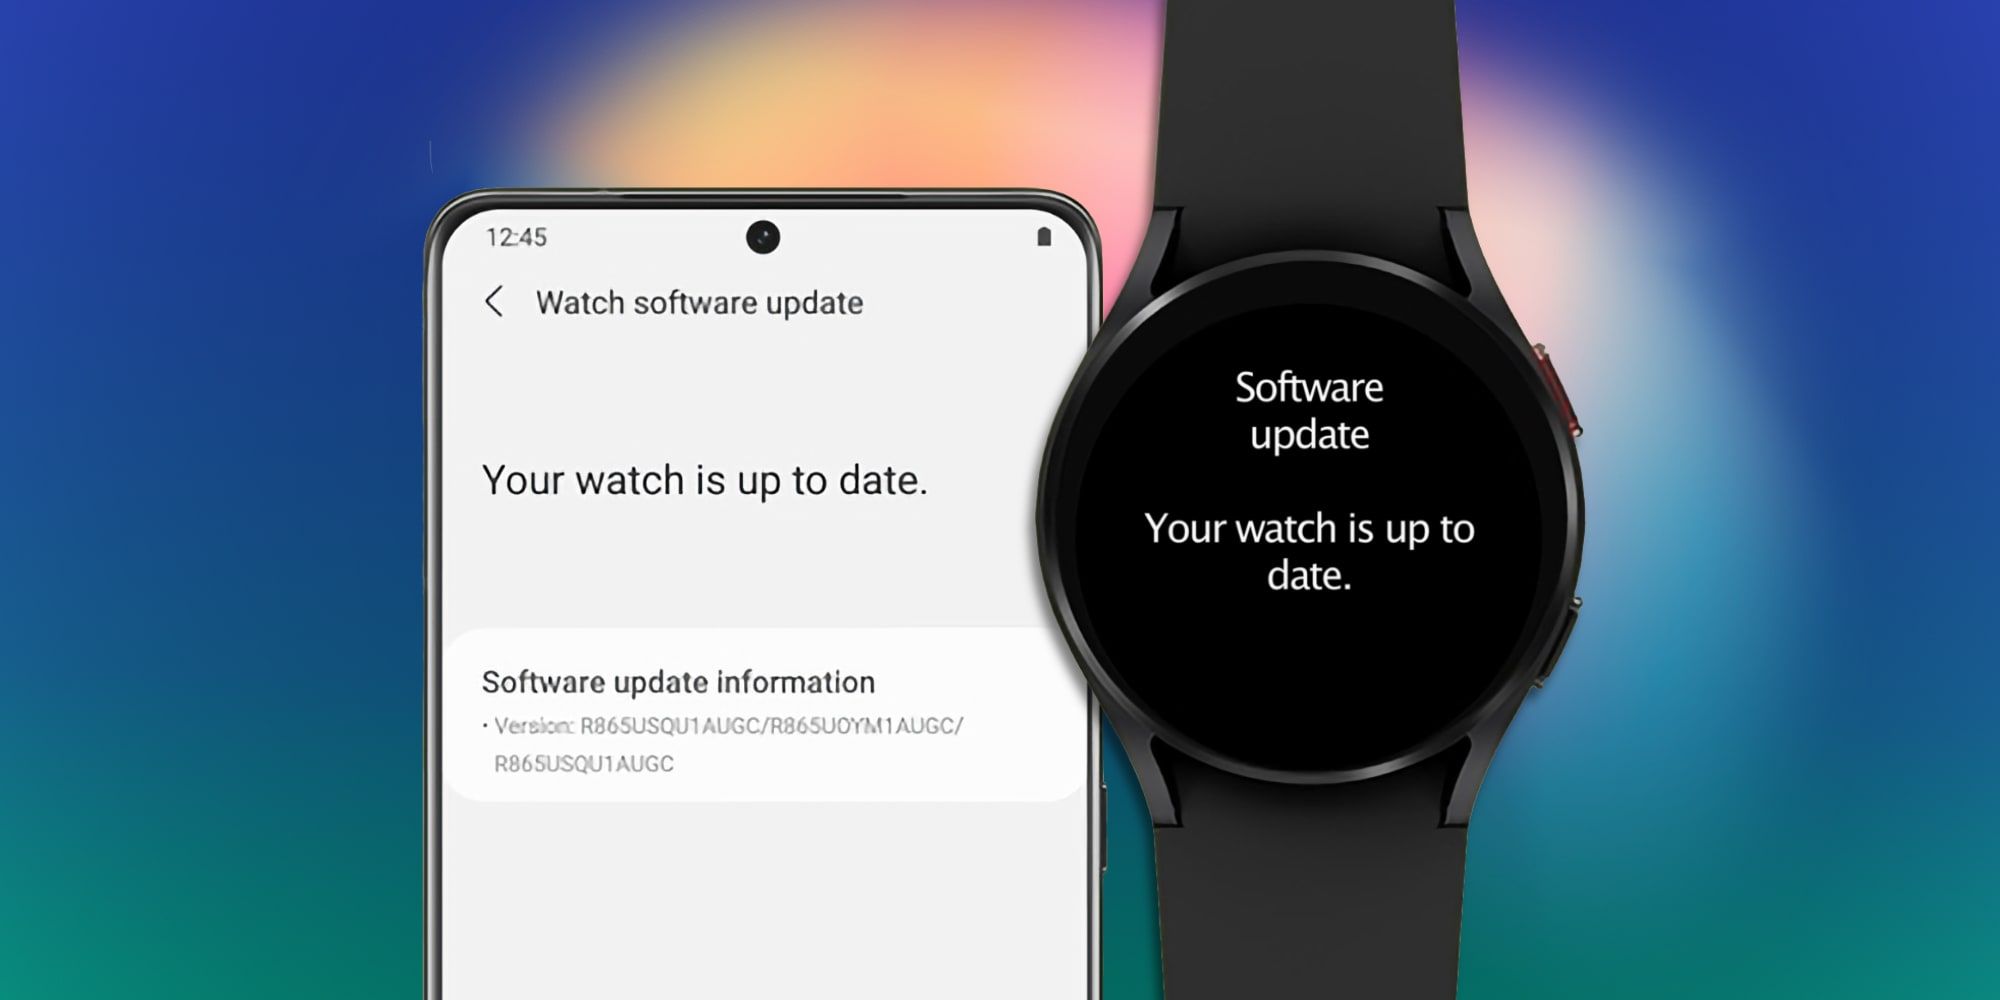 Samsung Galaxy Watch 4 Update Android Smartphone